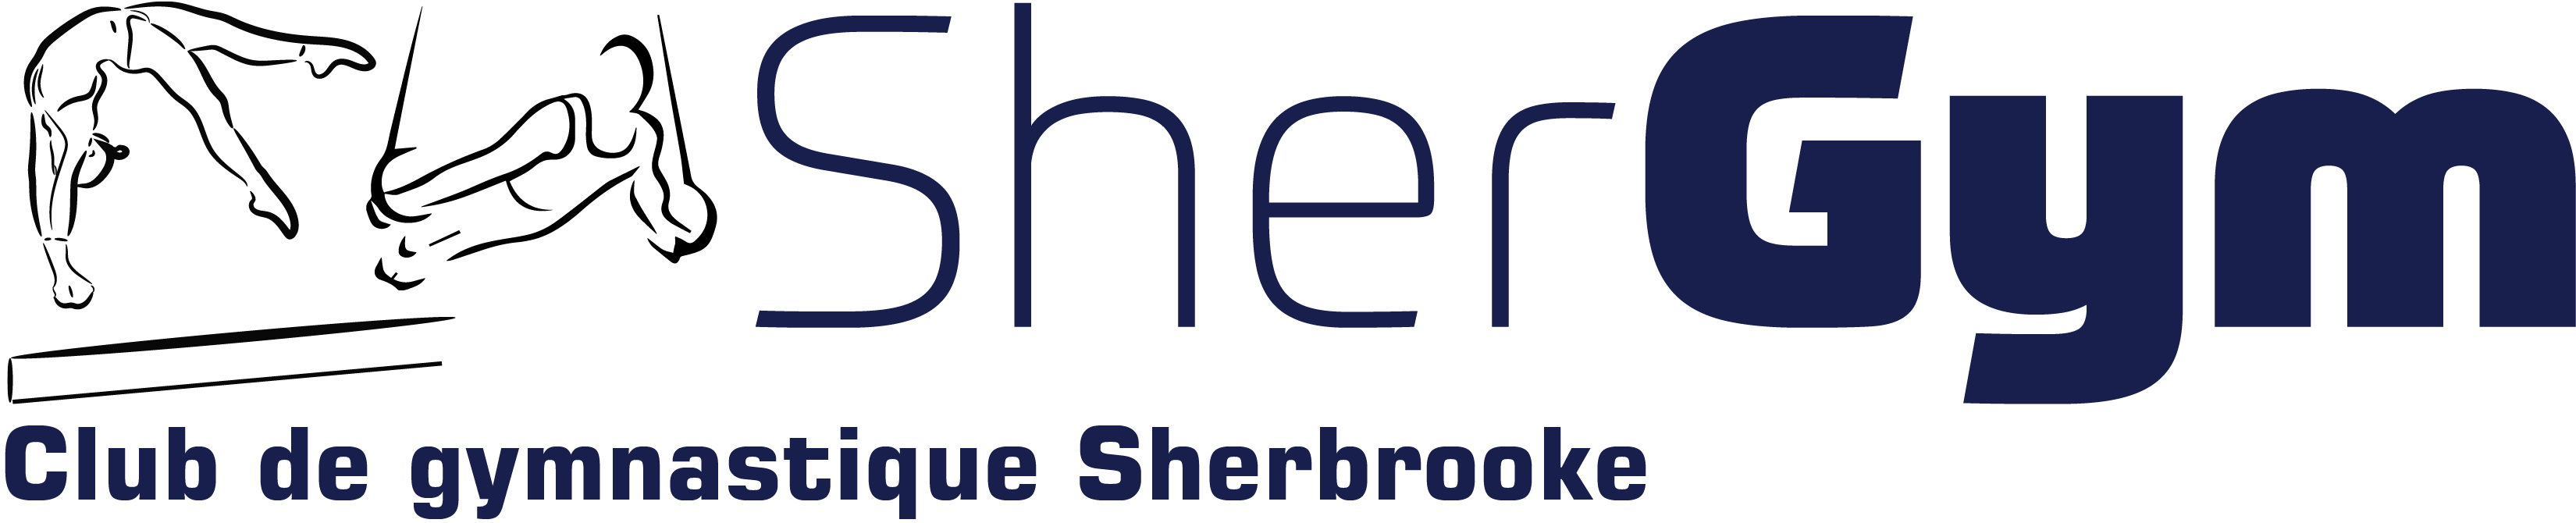 logo-Shergym-horizontal-sans-adresse1.png